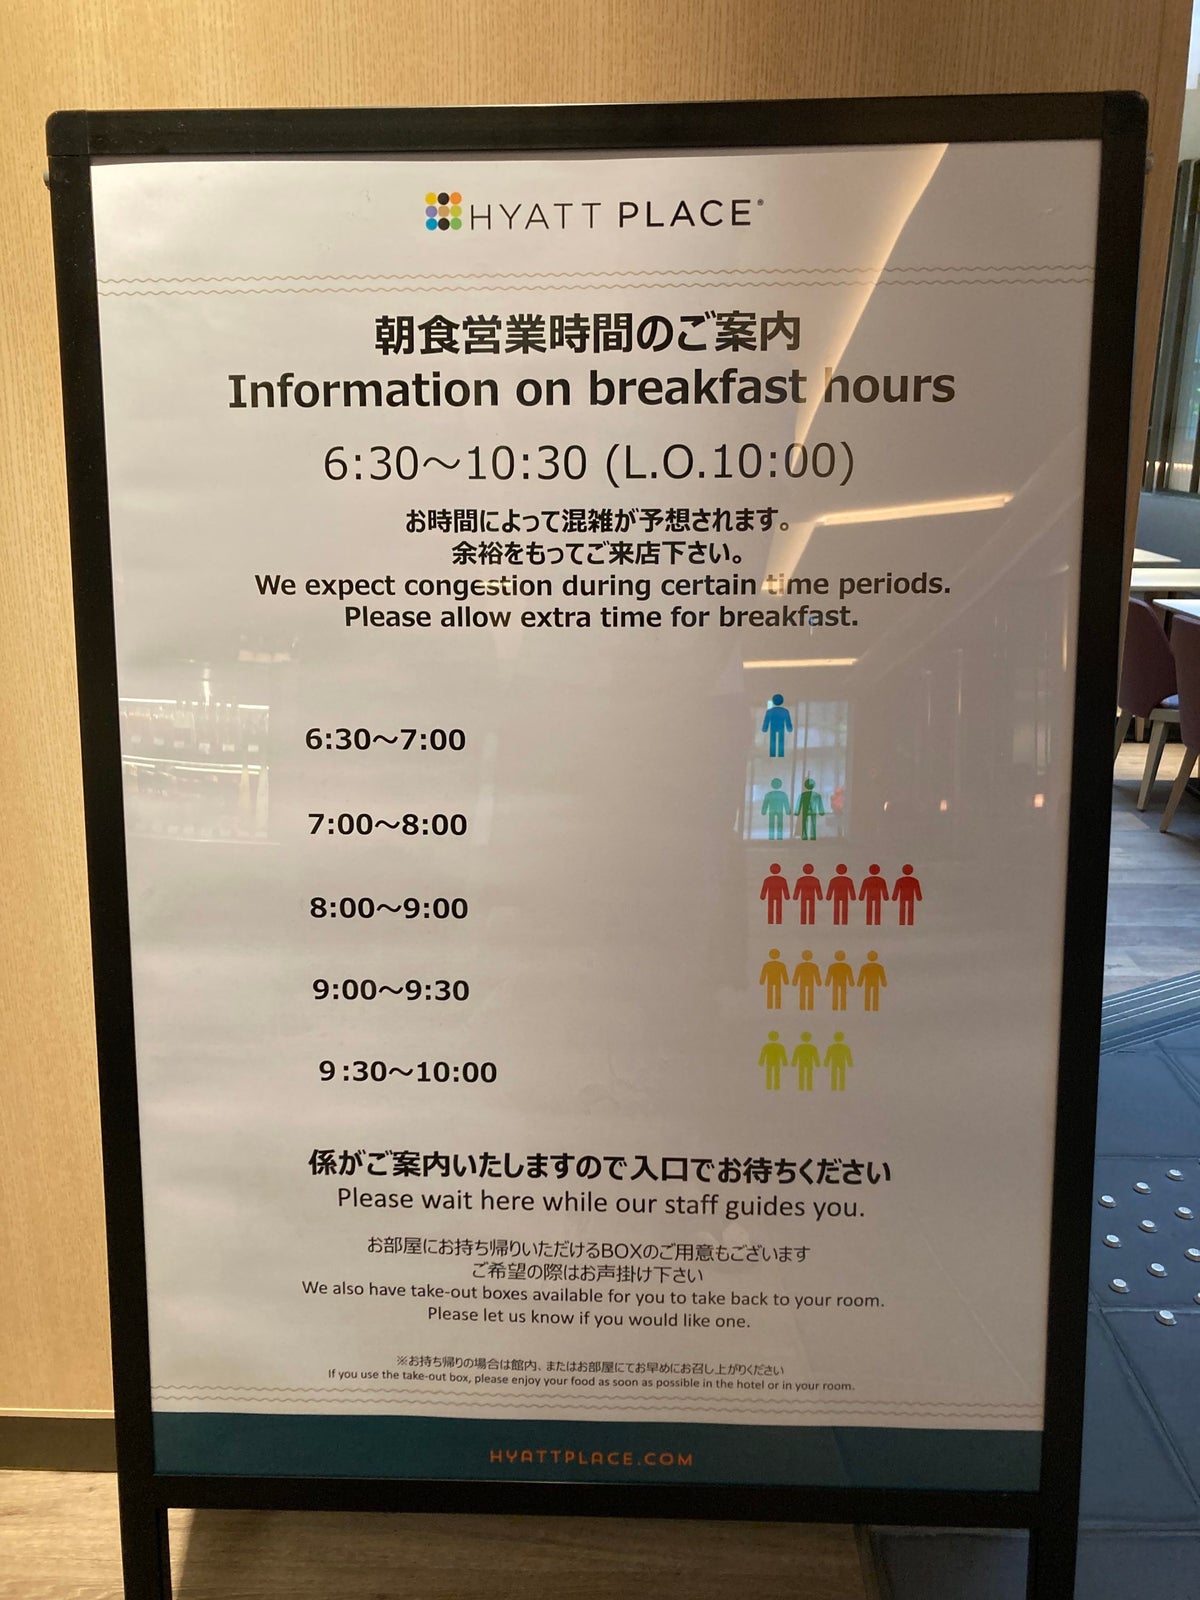 Hyatt Place Kyoto breakfast expected wait times